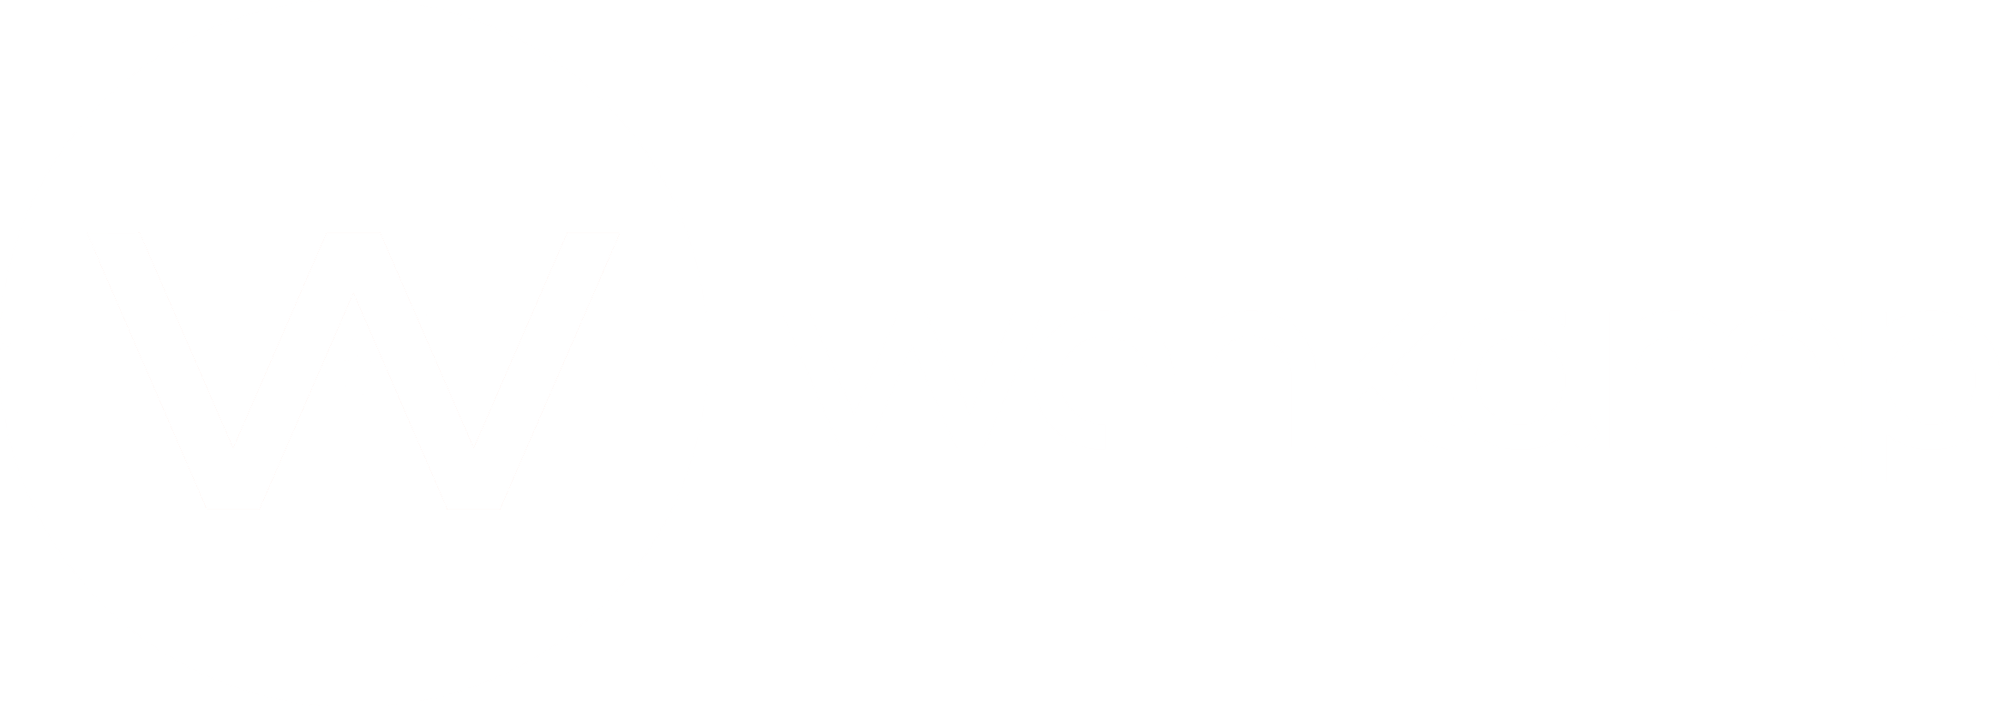 wehkamp-logo-horizontal-rgb-koraal